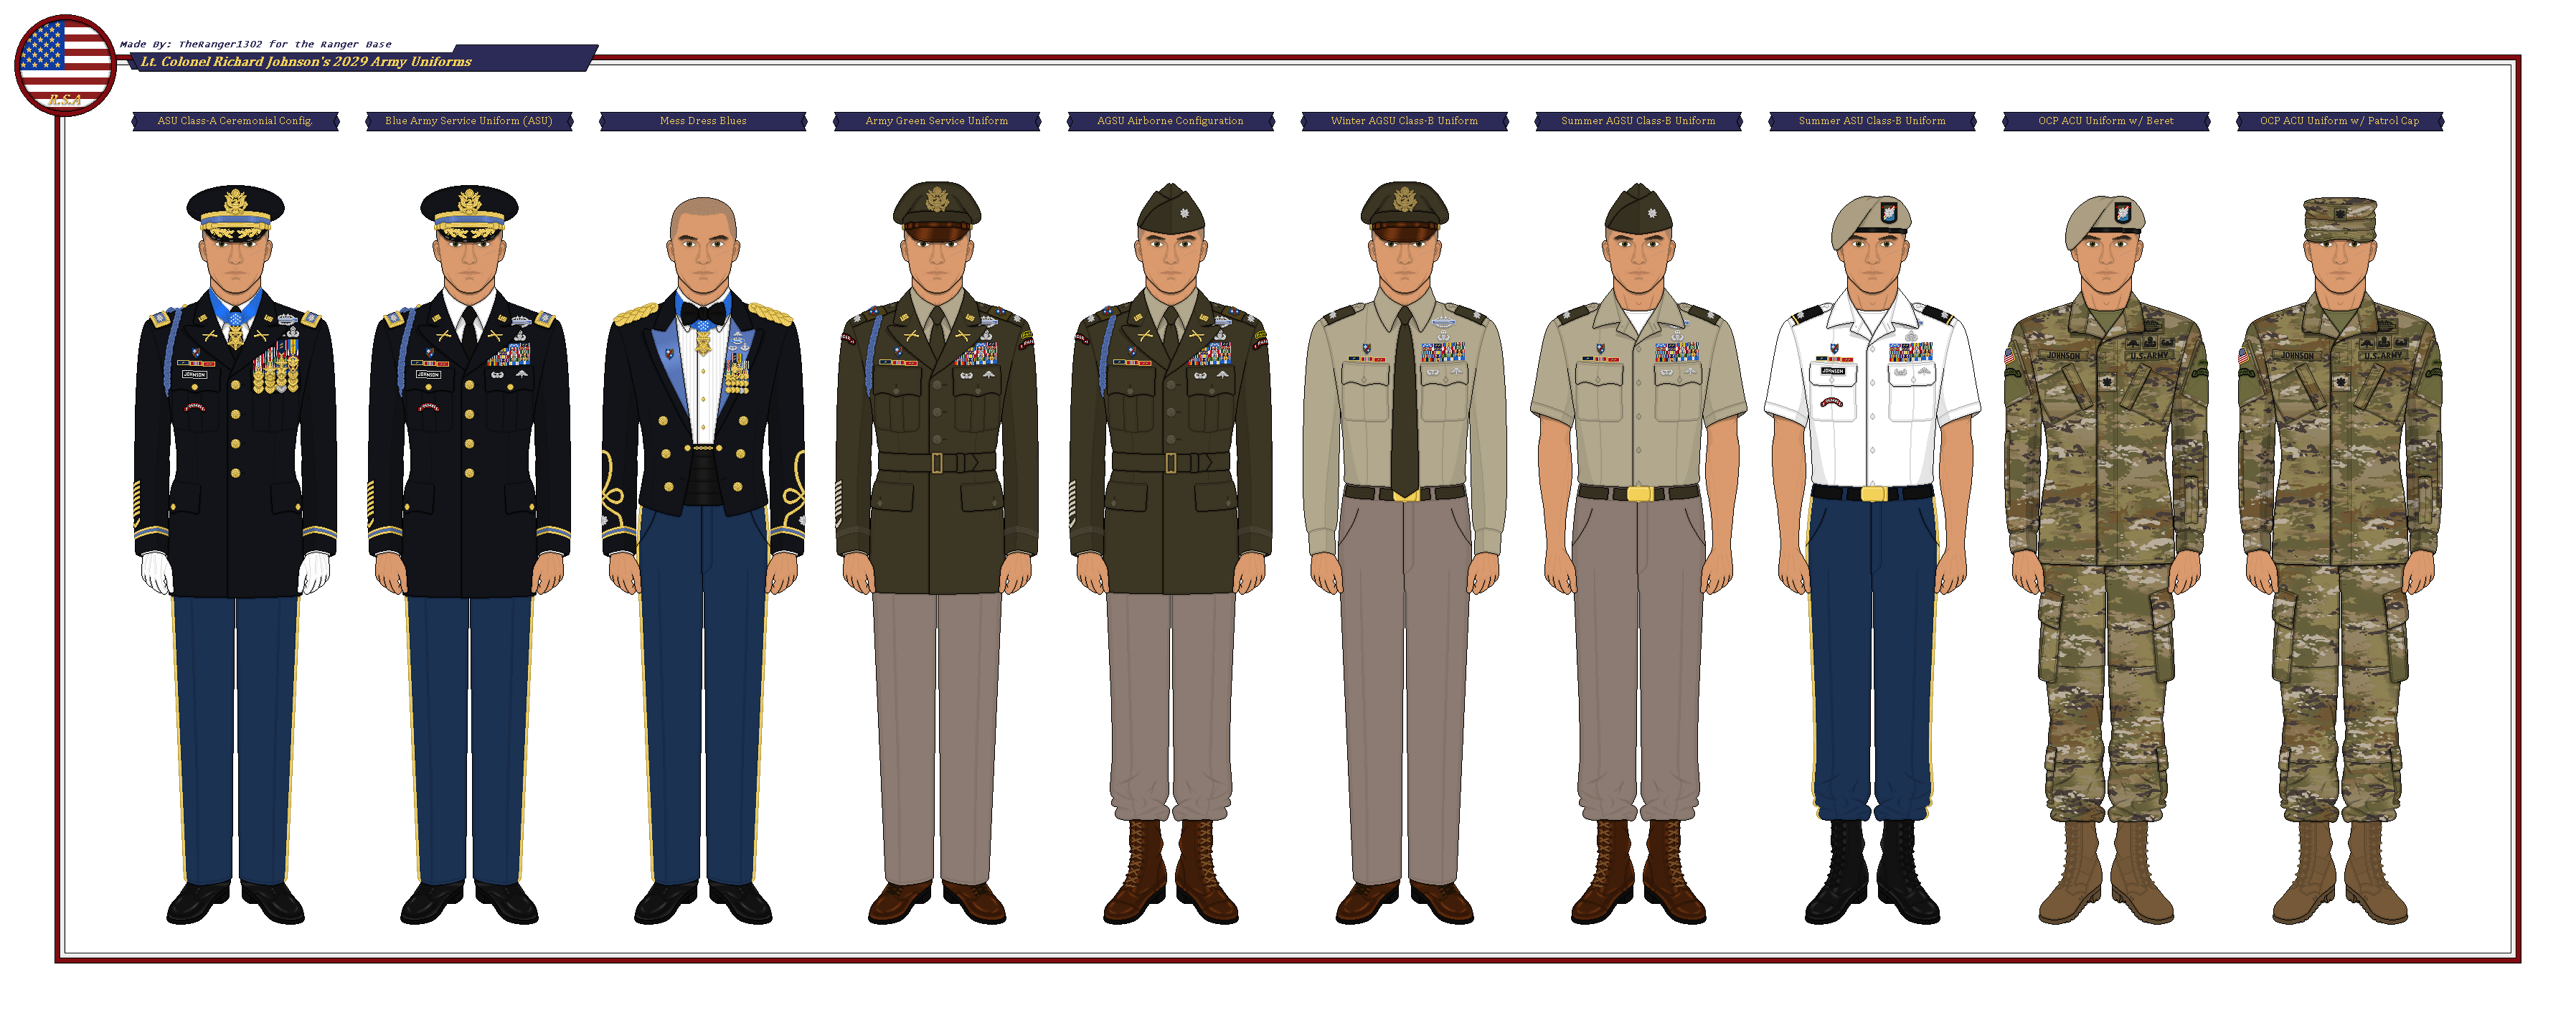 Richard'S U.S. Army Uniforms (Lt. Colonel) By Theranger1302 On Deviantart